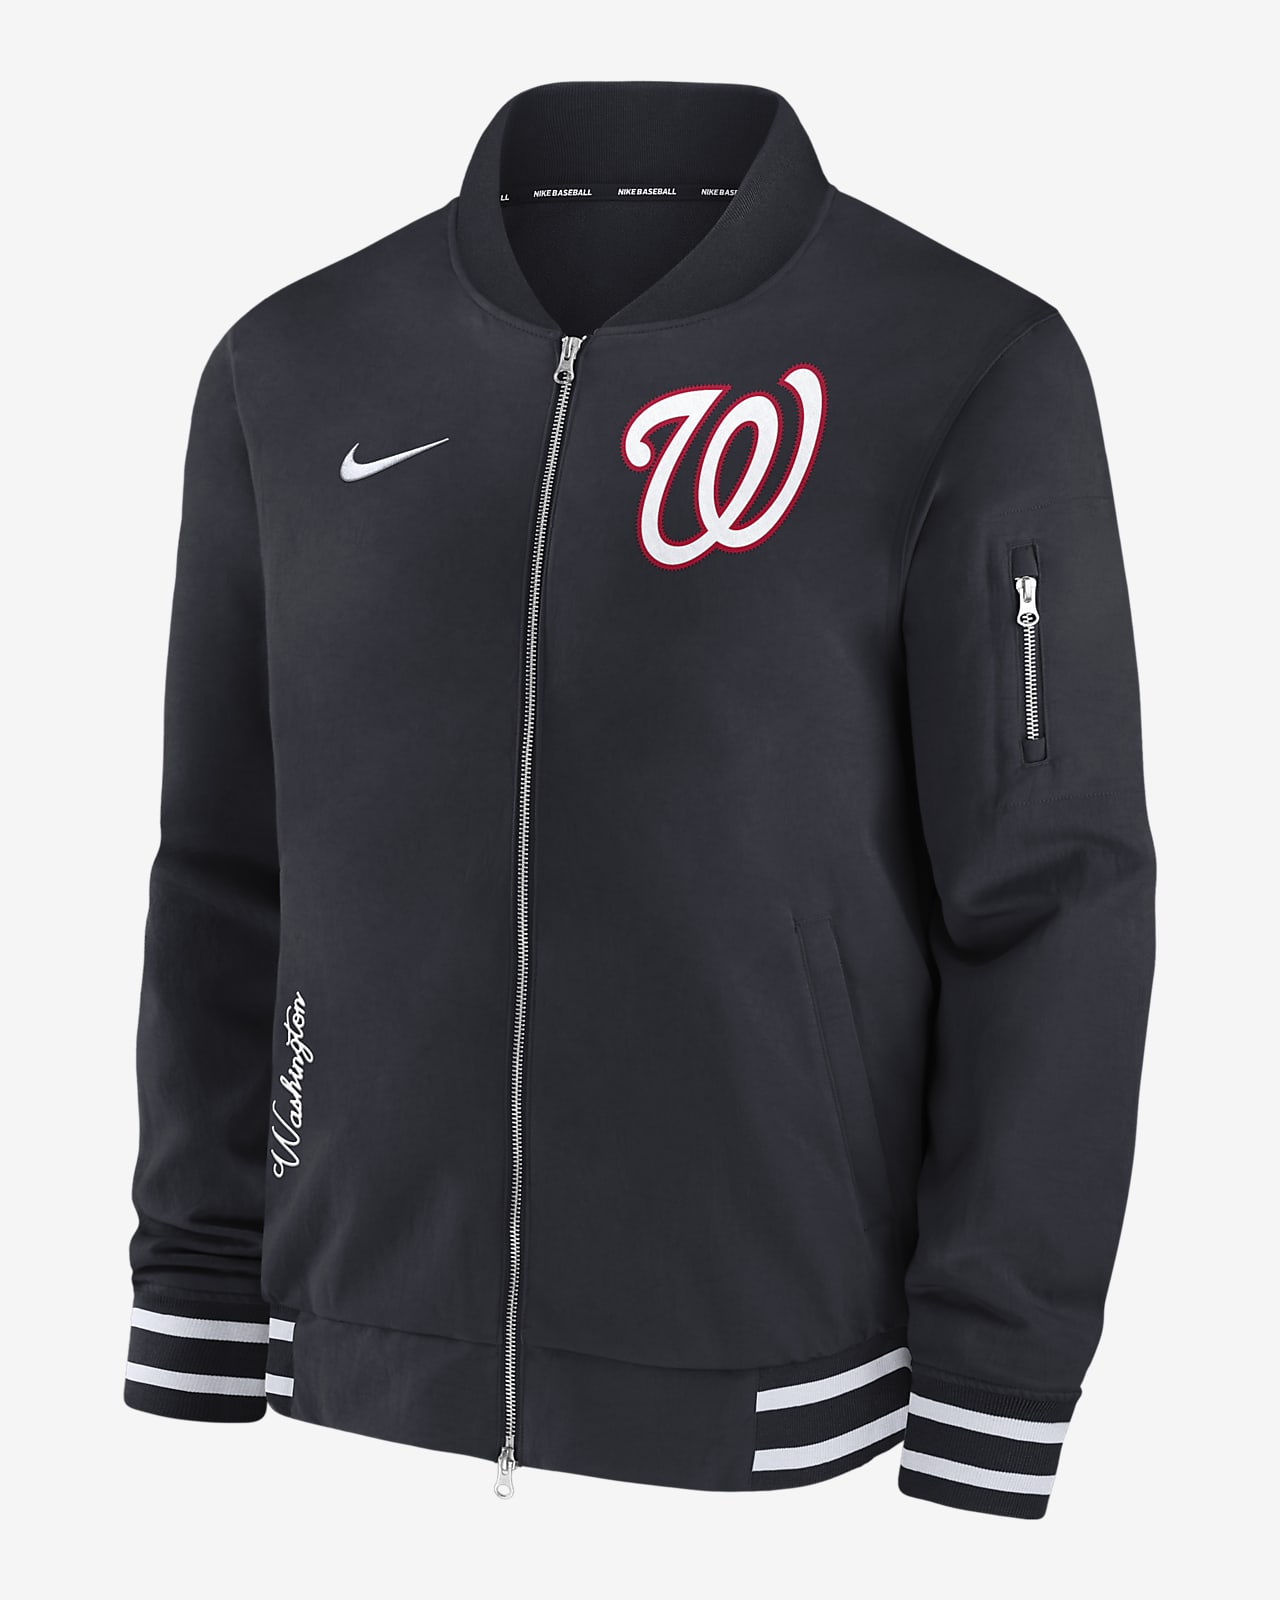 Washington Nationals Authentic Collection Men's Nike MLB Full-Zip Bomber Jacket